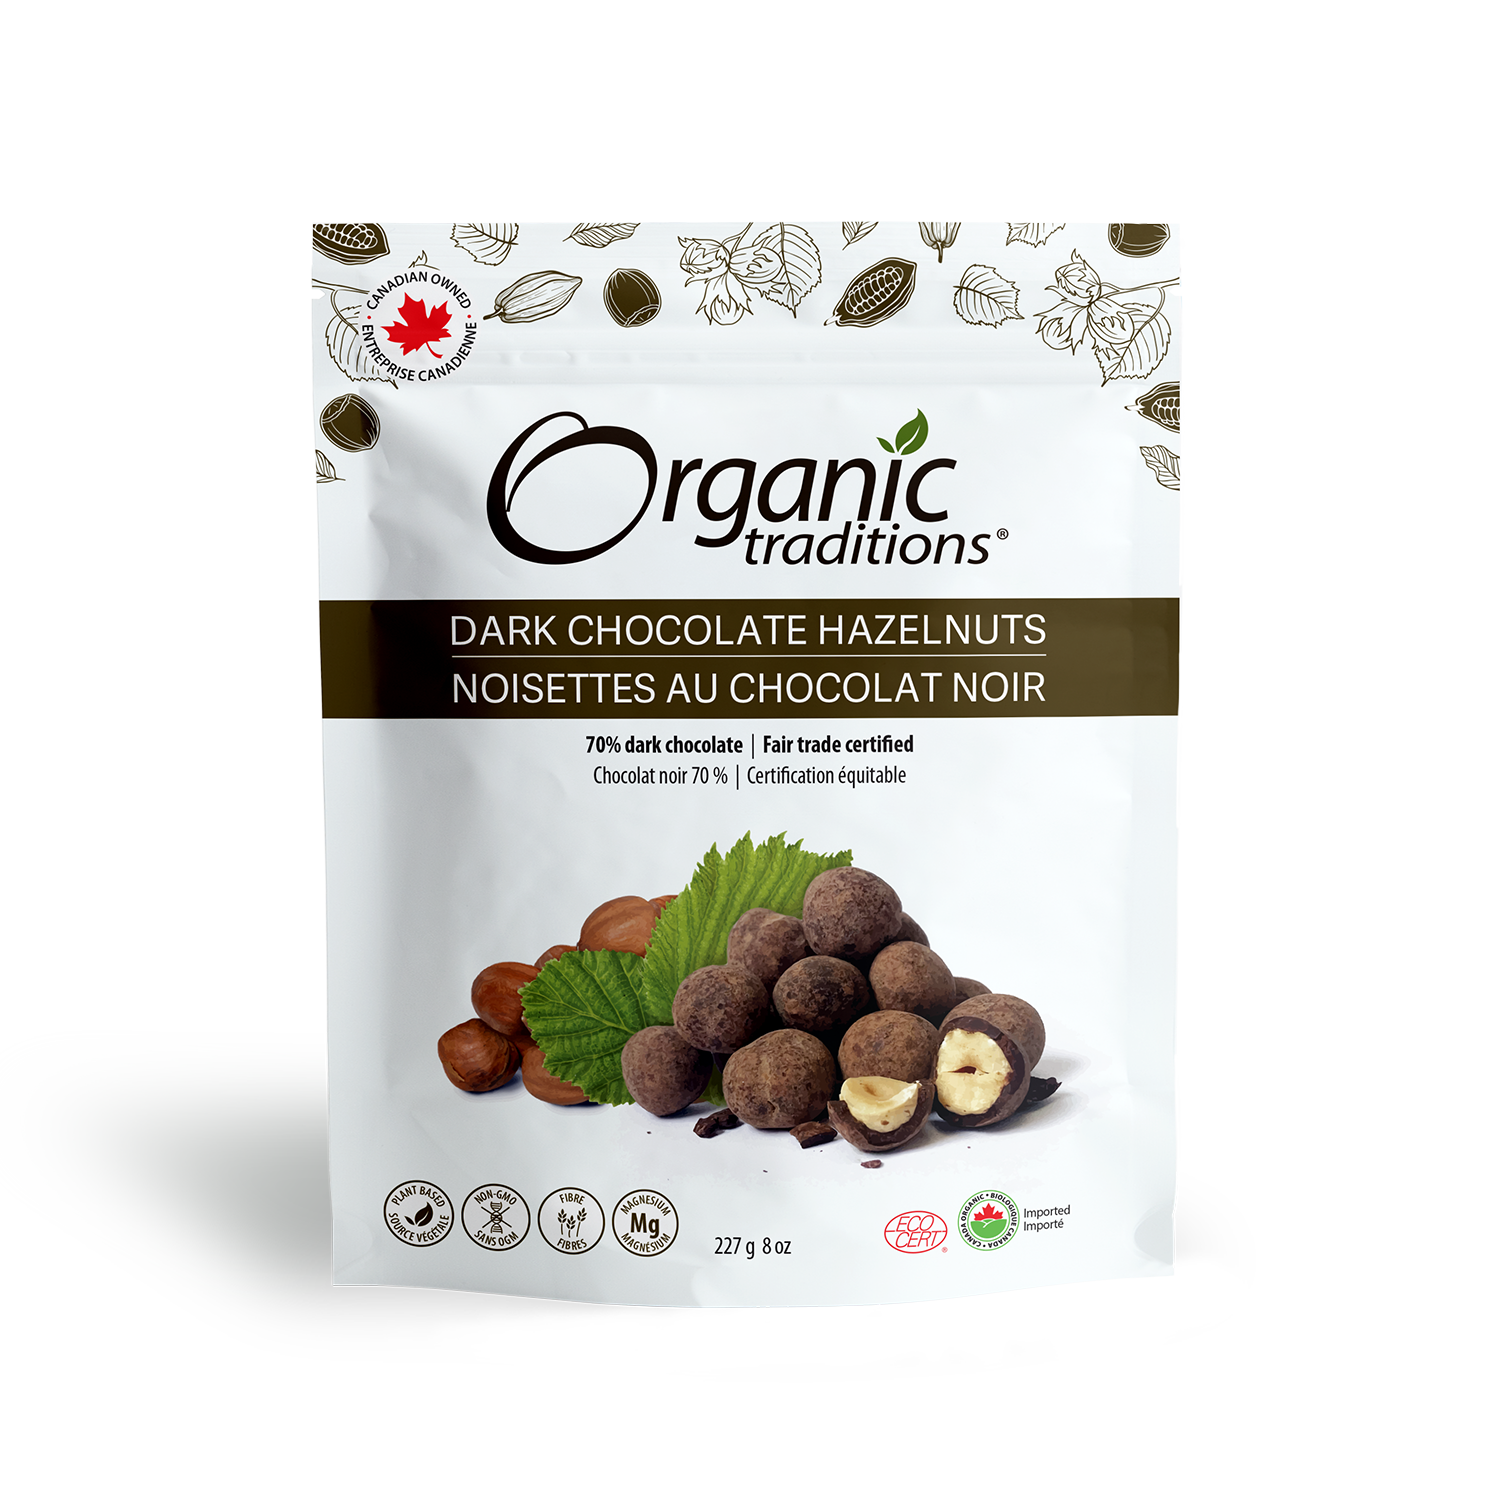 organic traditions dark chocolate hazelnuts front of bag image